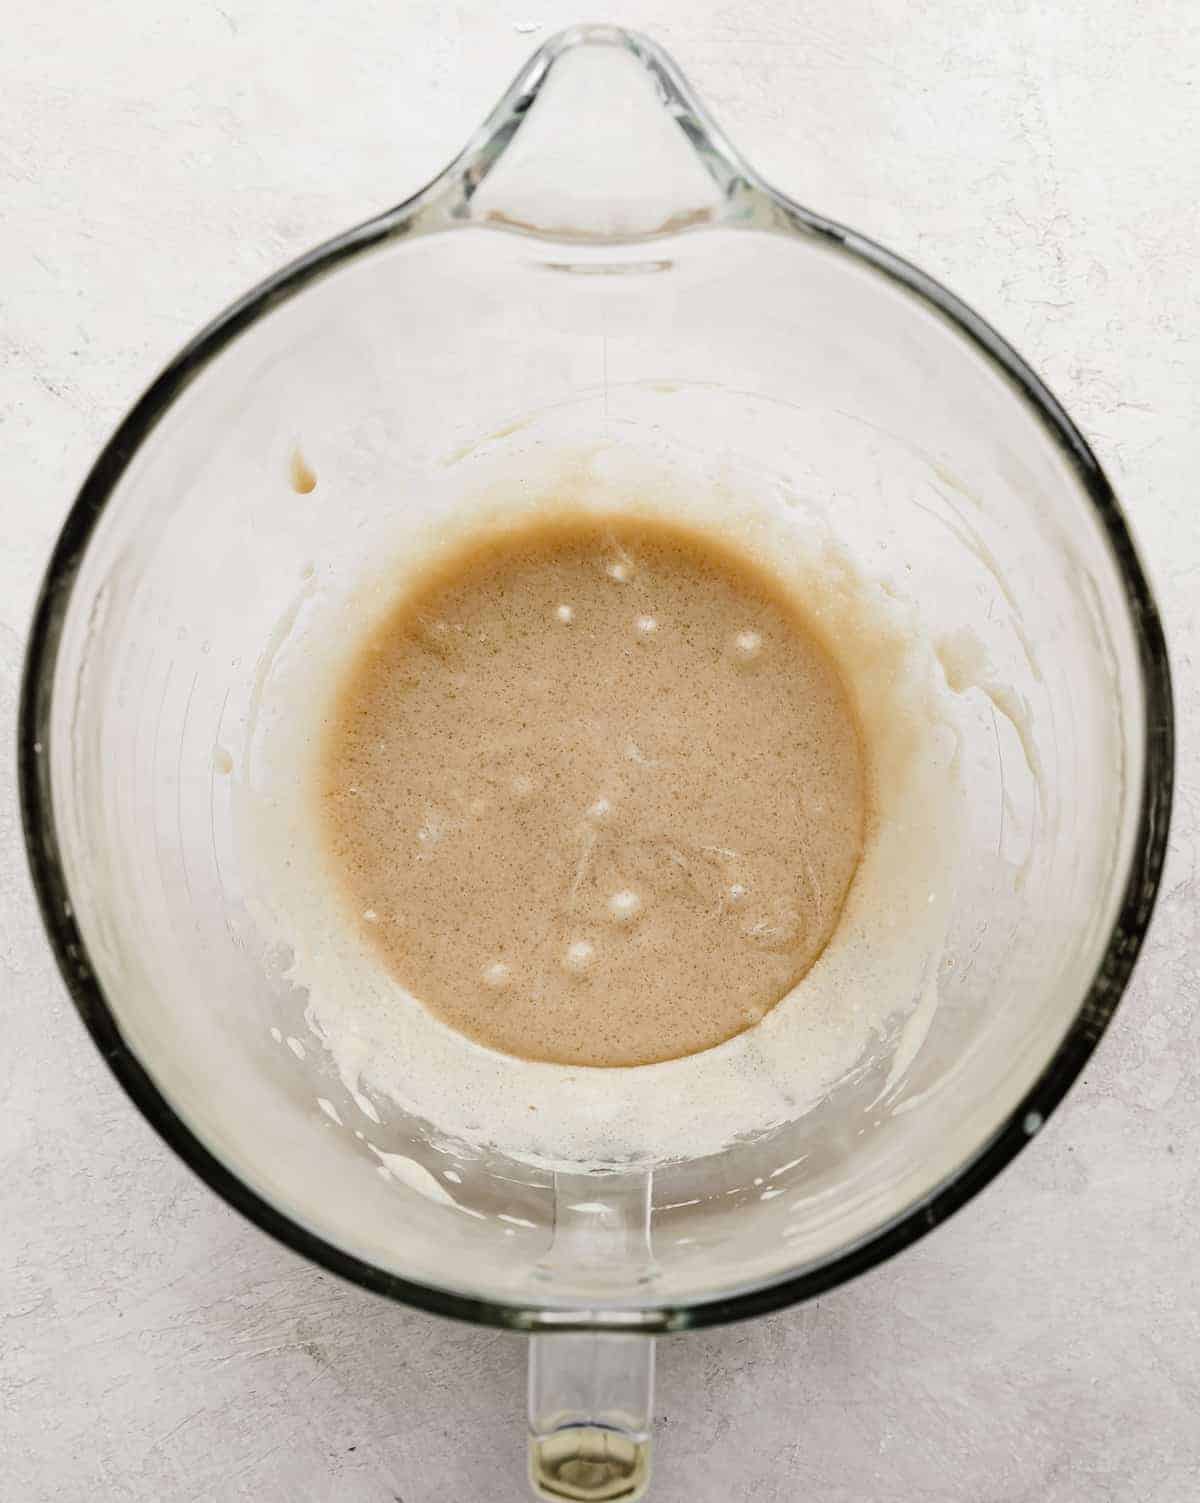 A tan liquid mixture in a glass stand mixer bowl.